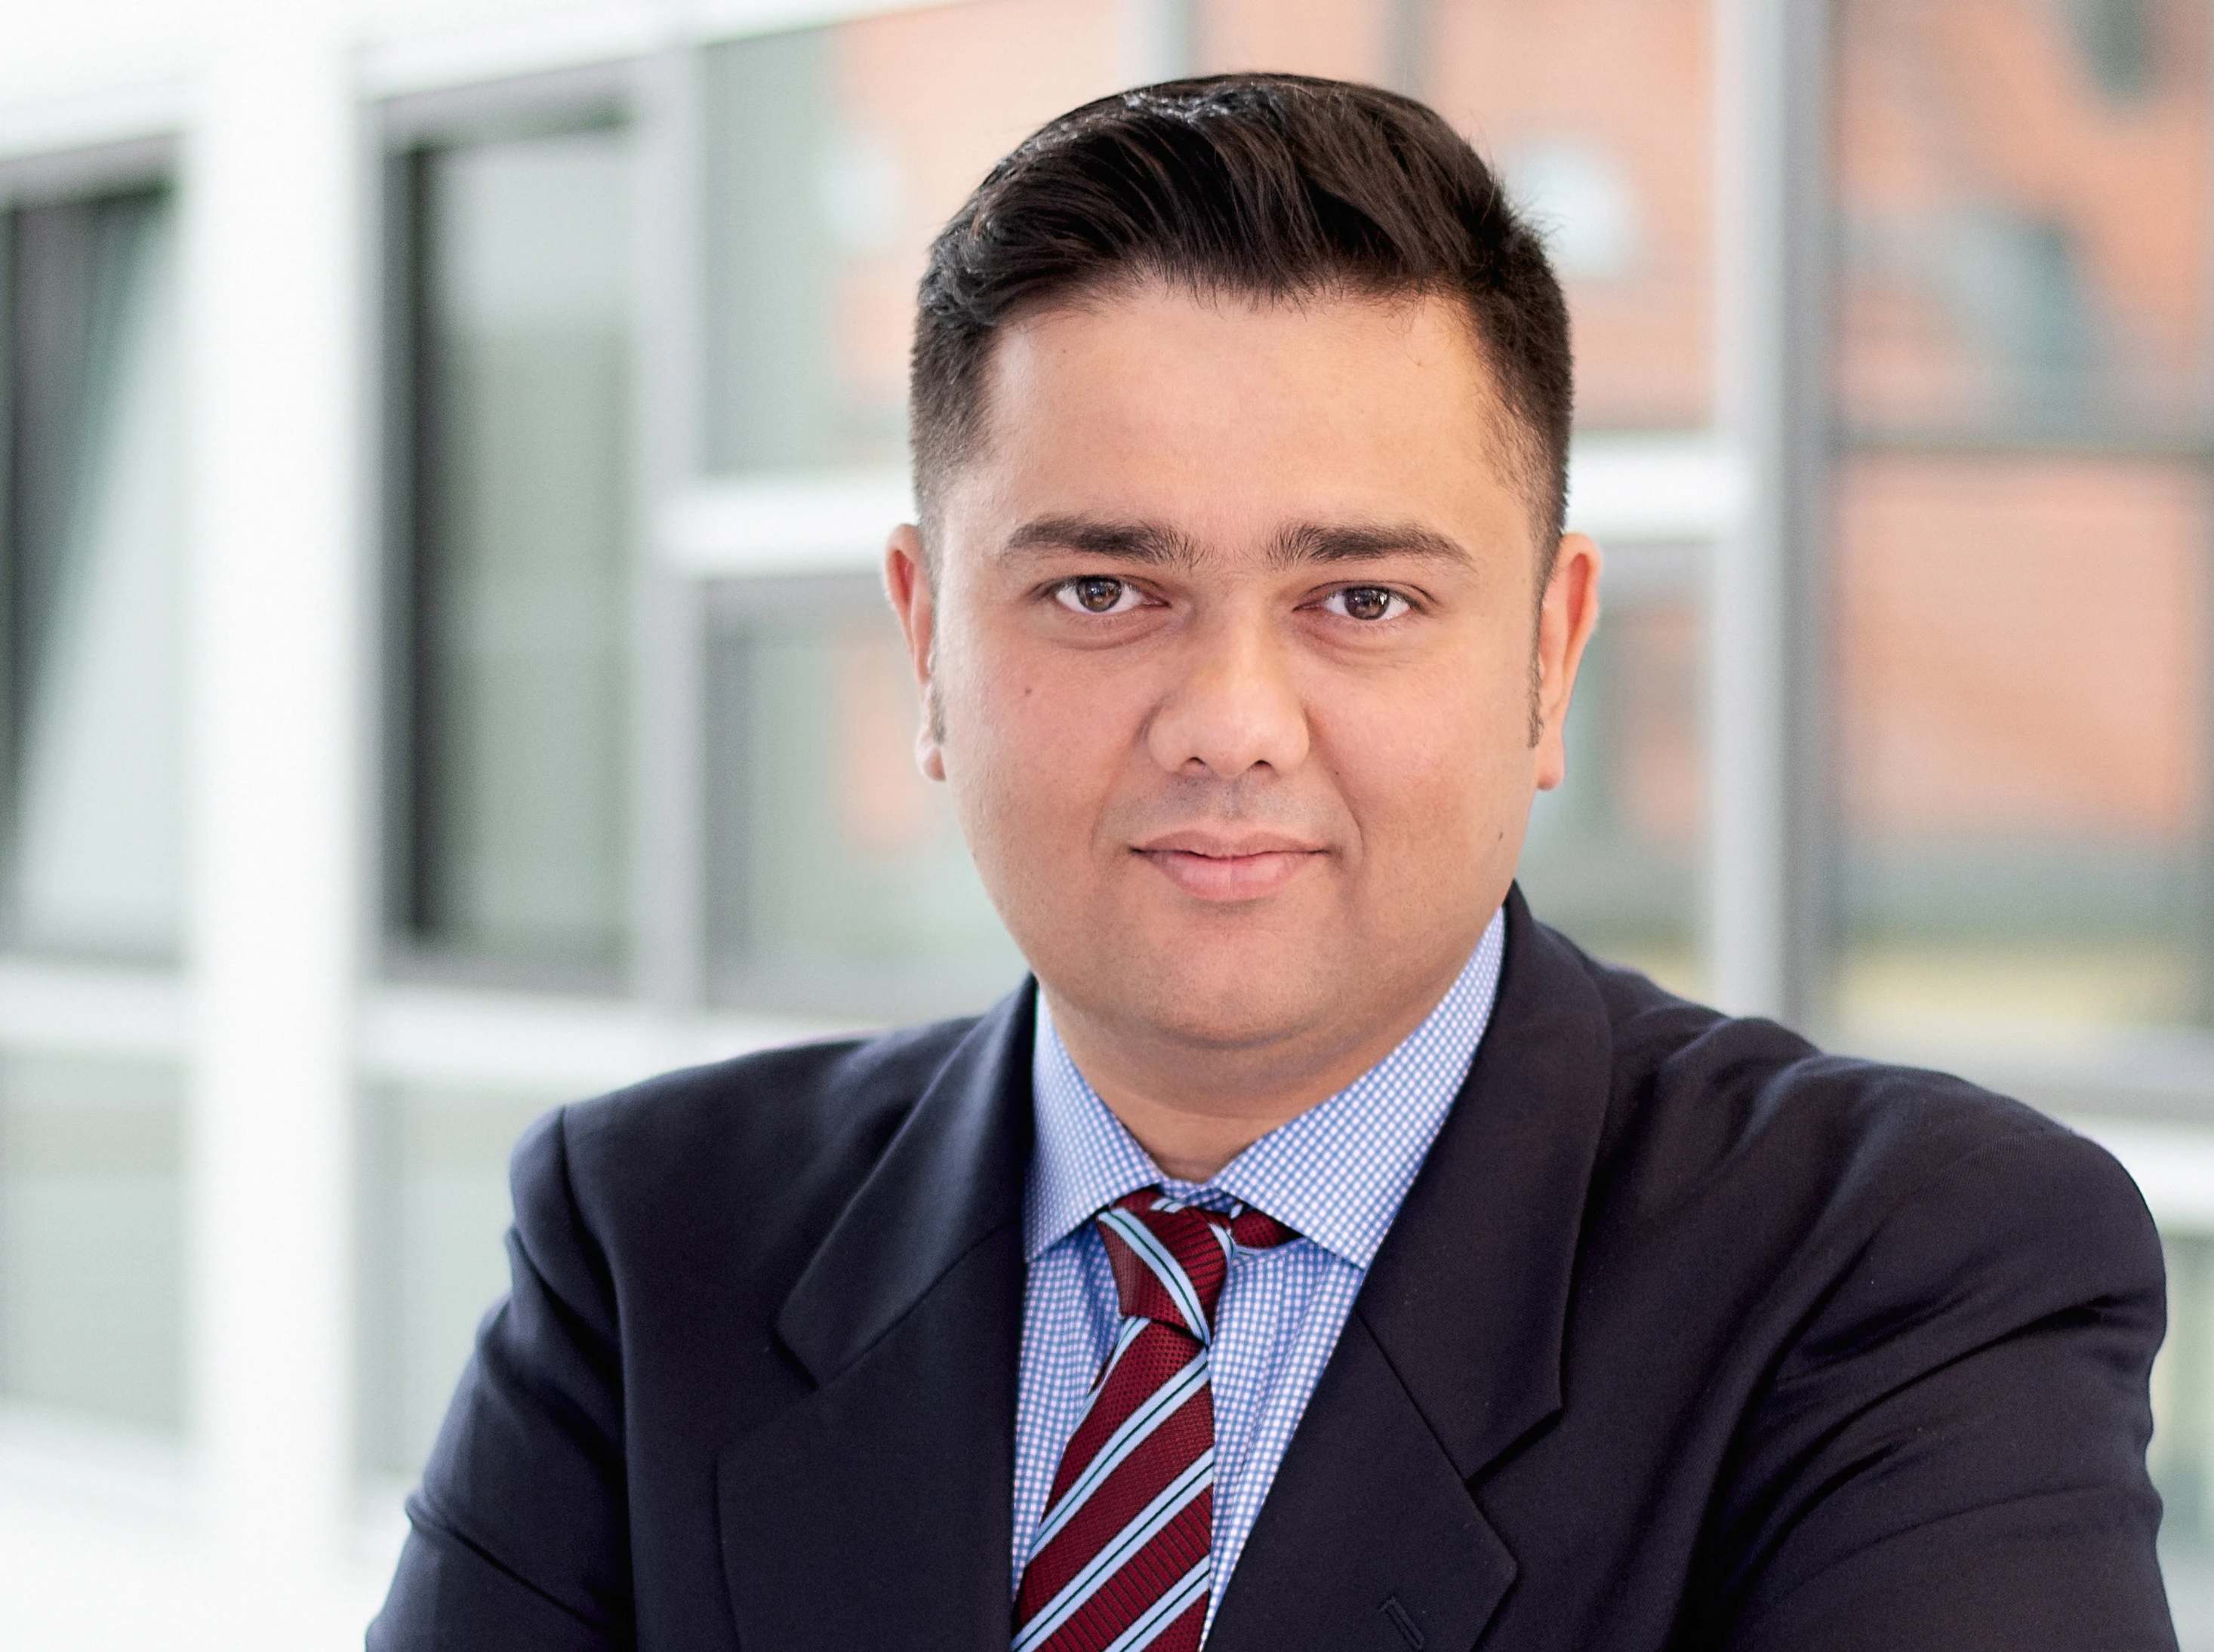 Rushabh Desai, CEO Allianz Real Estate Asia Pacific